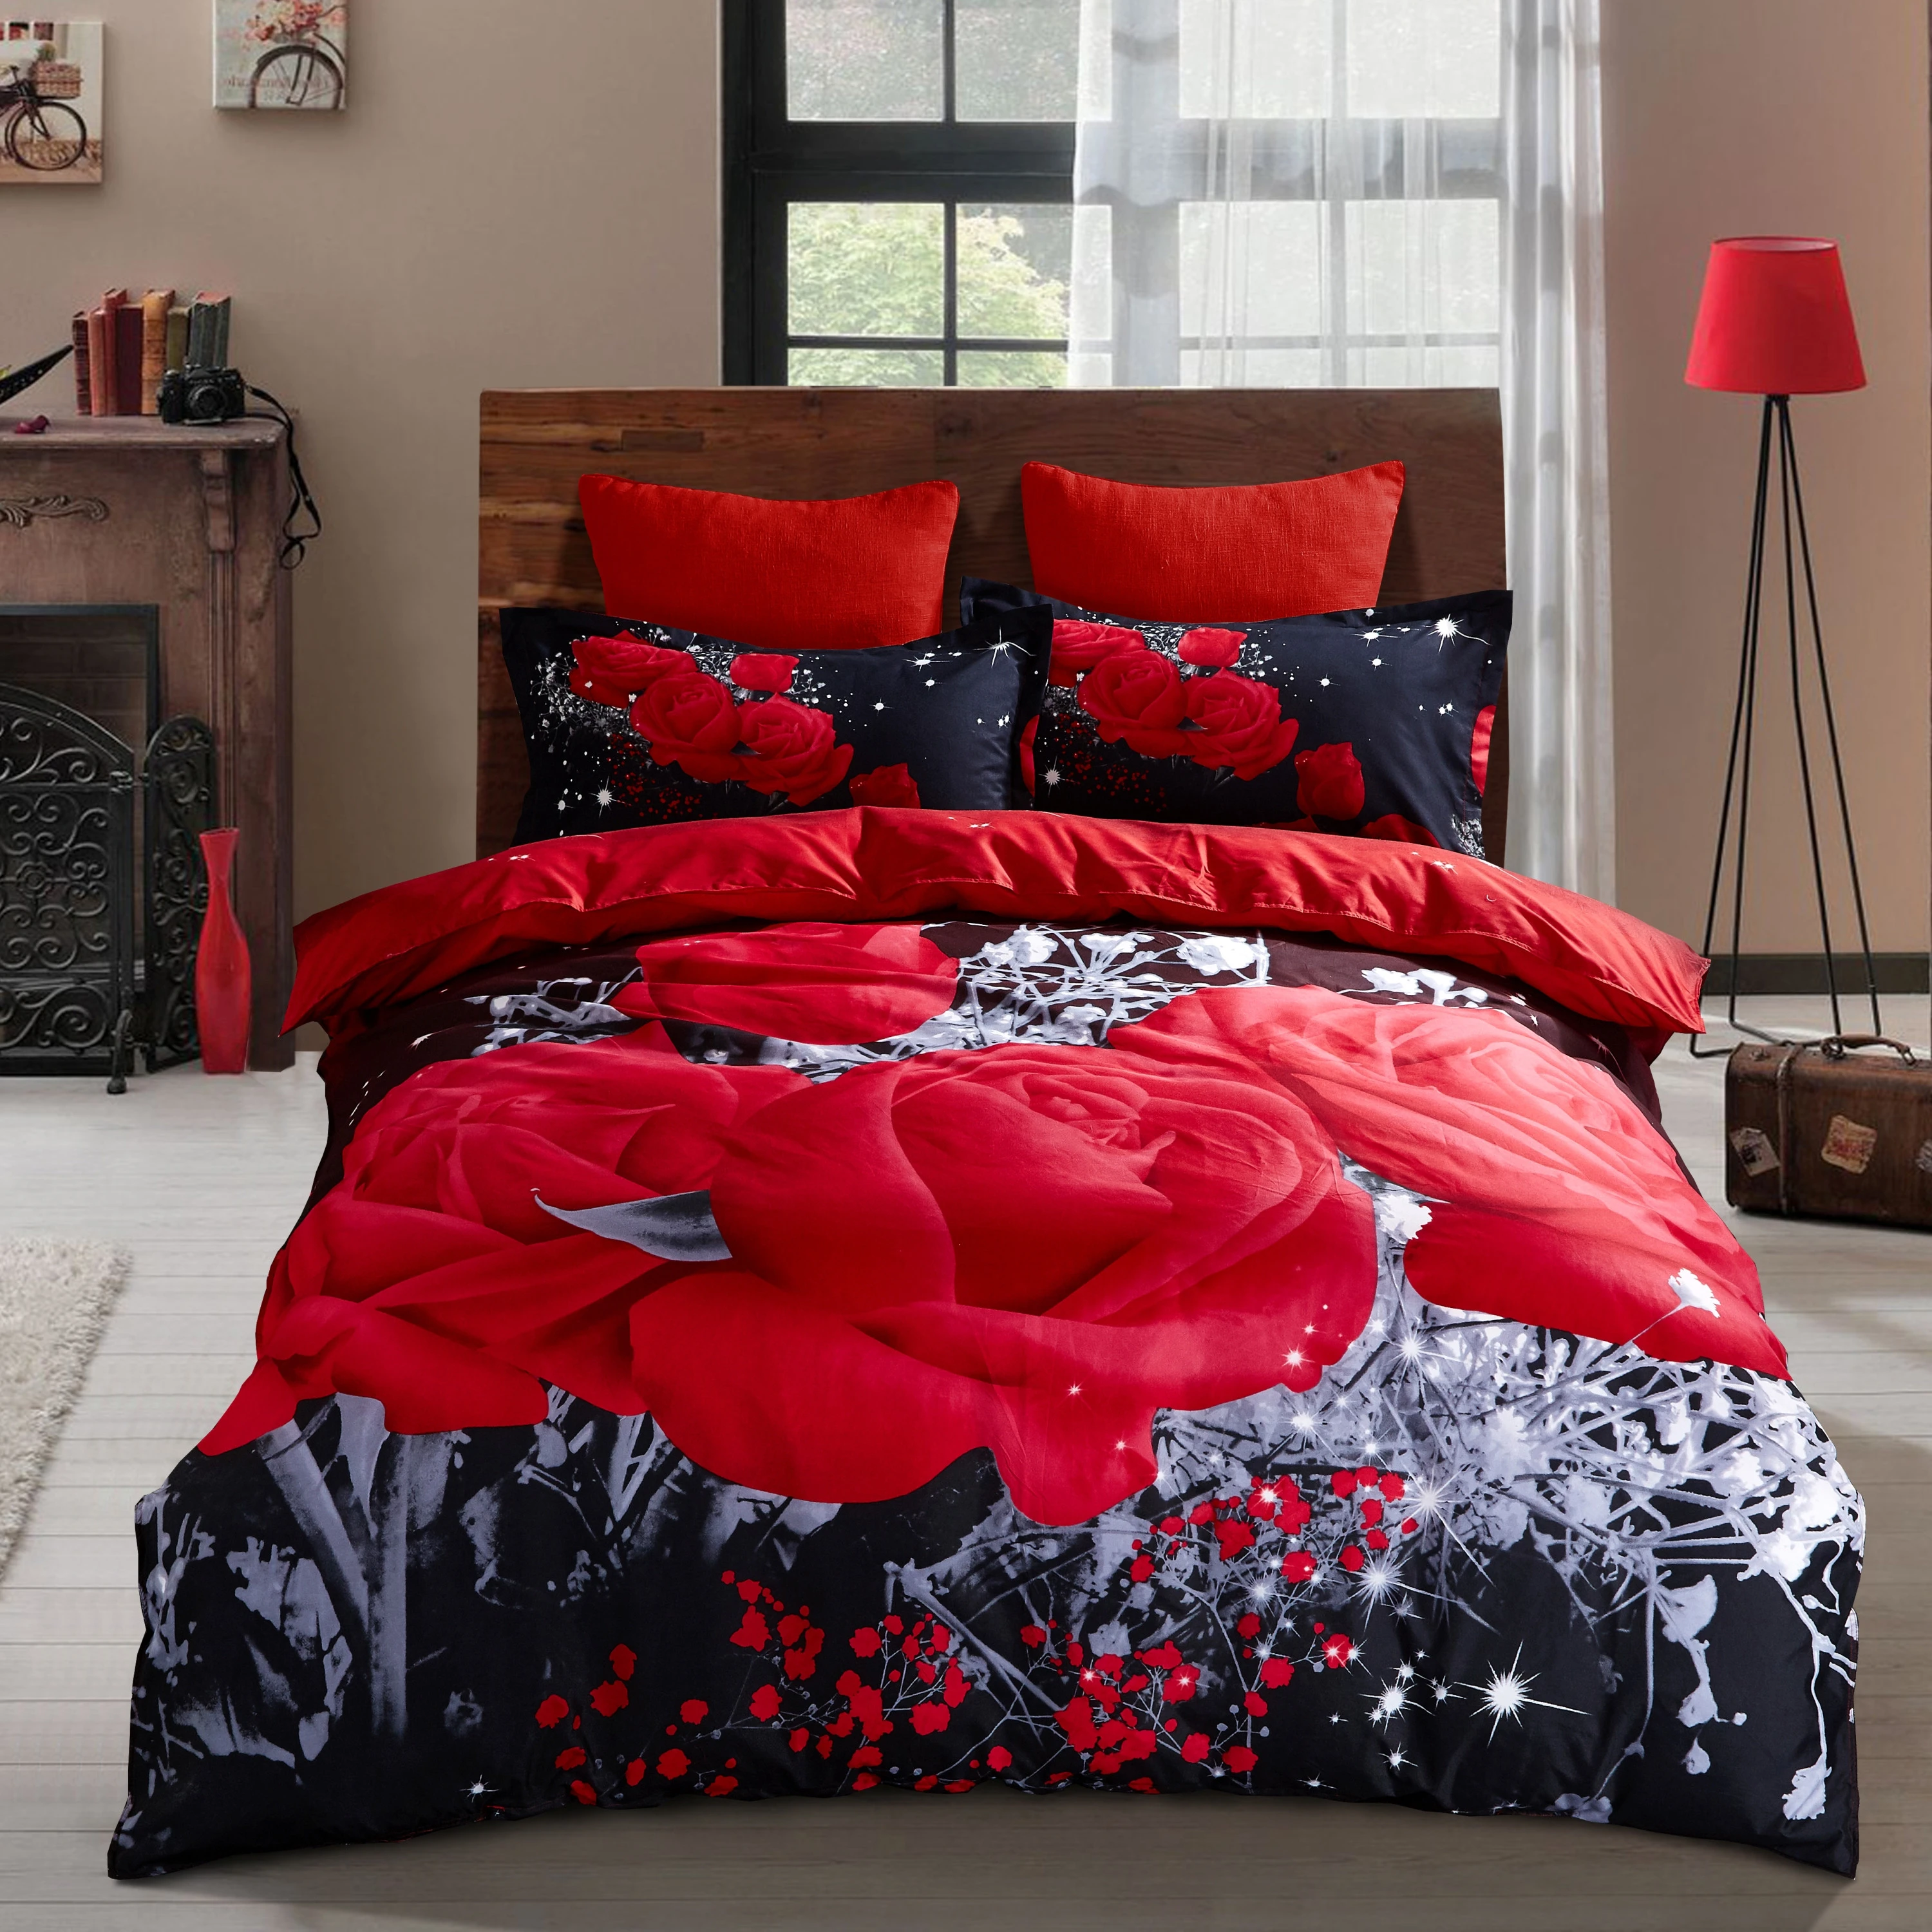 ROSE Bedding Duvet Cover Queen Set Comforter Covers with Pillow Shams Duvets